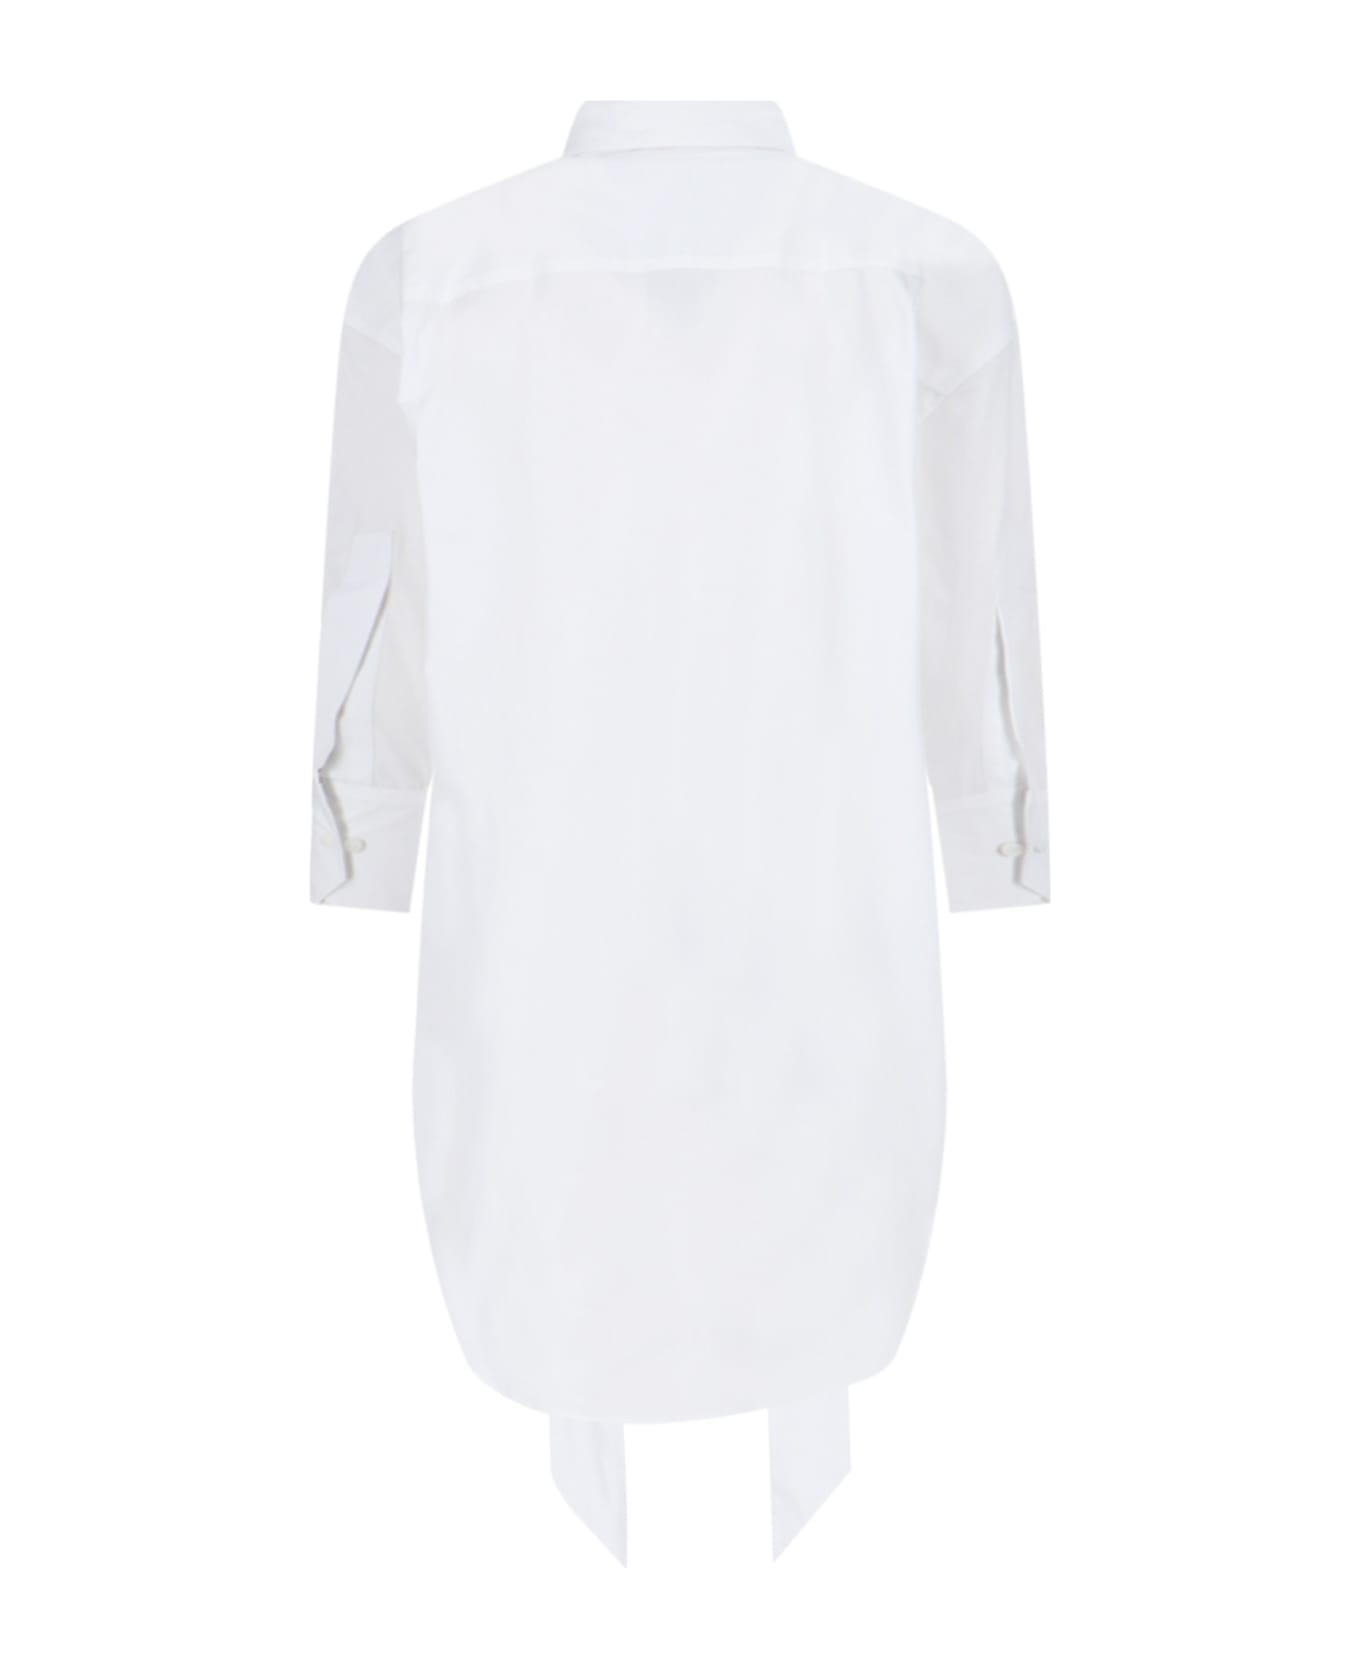 Sa Su Phi Band Detail Shirt - White